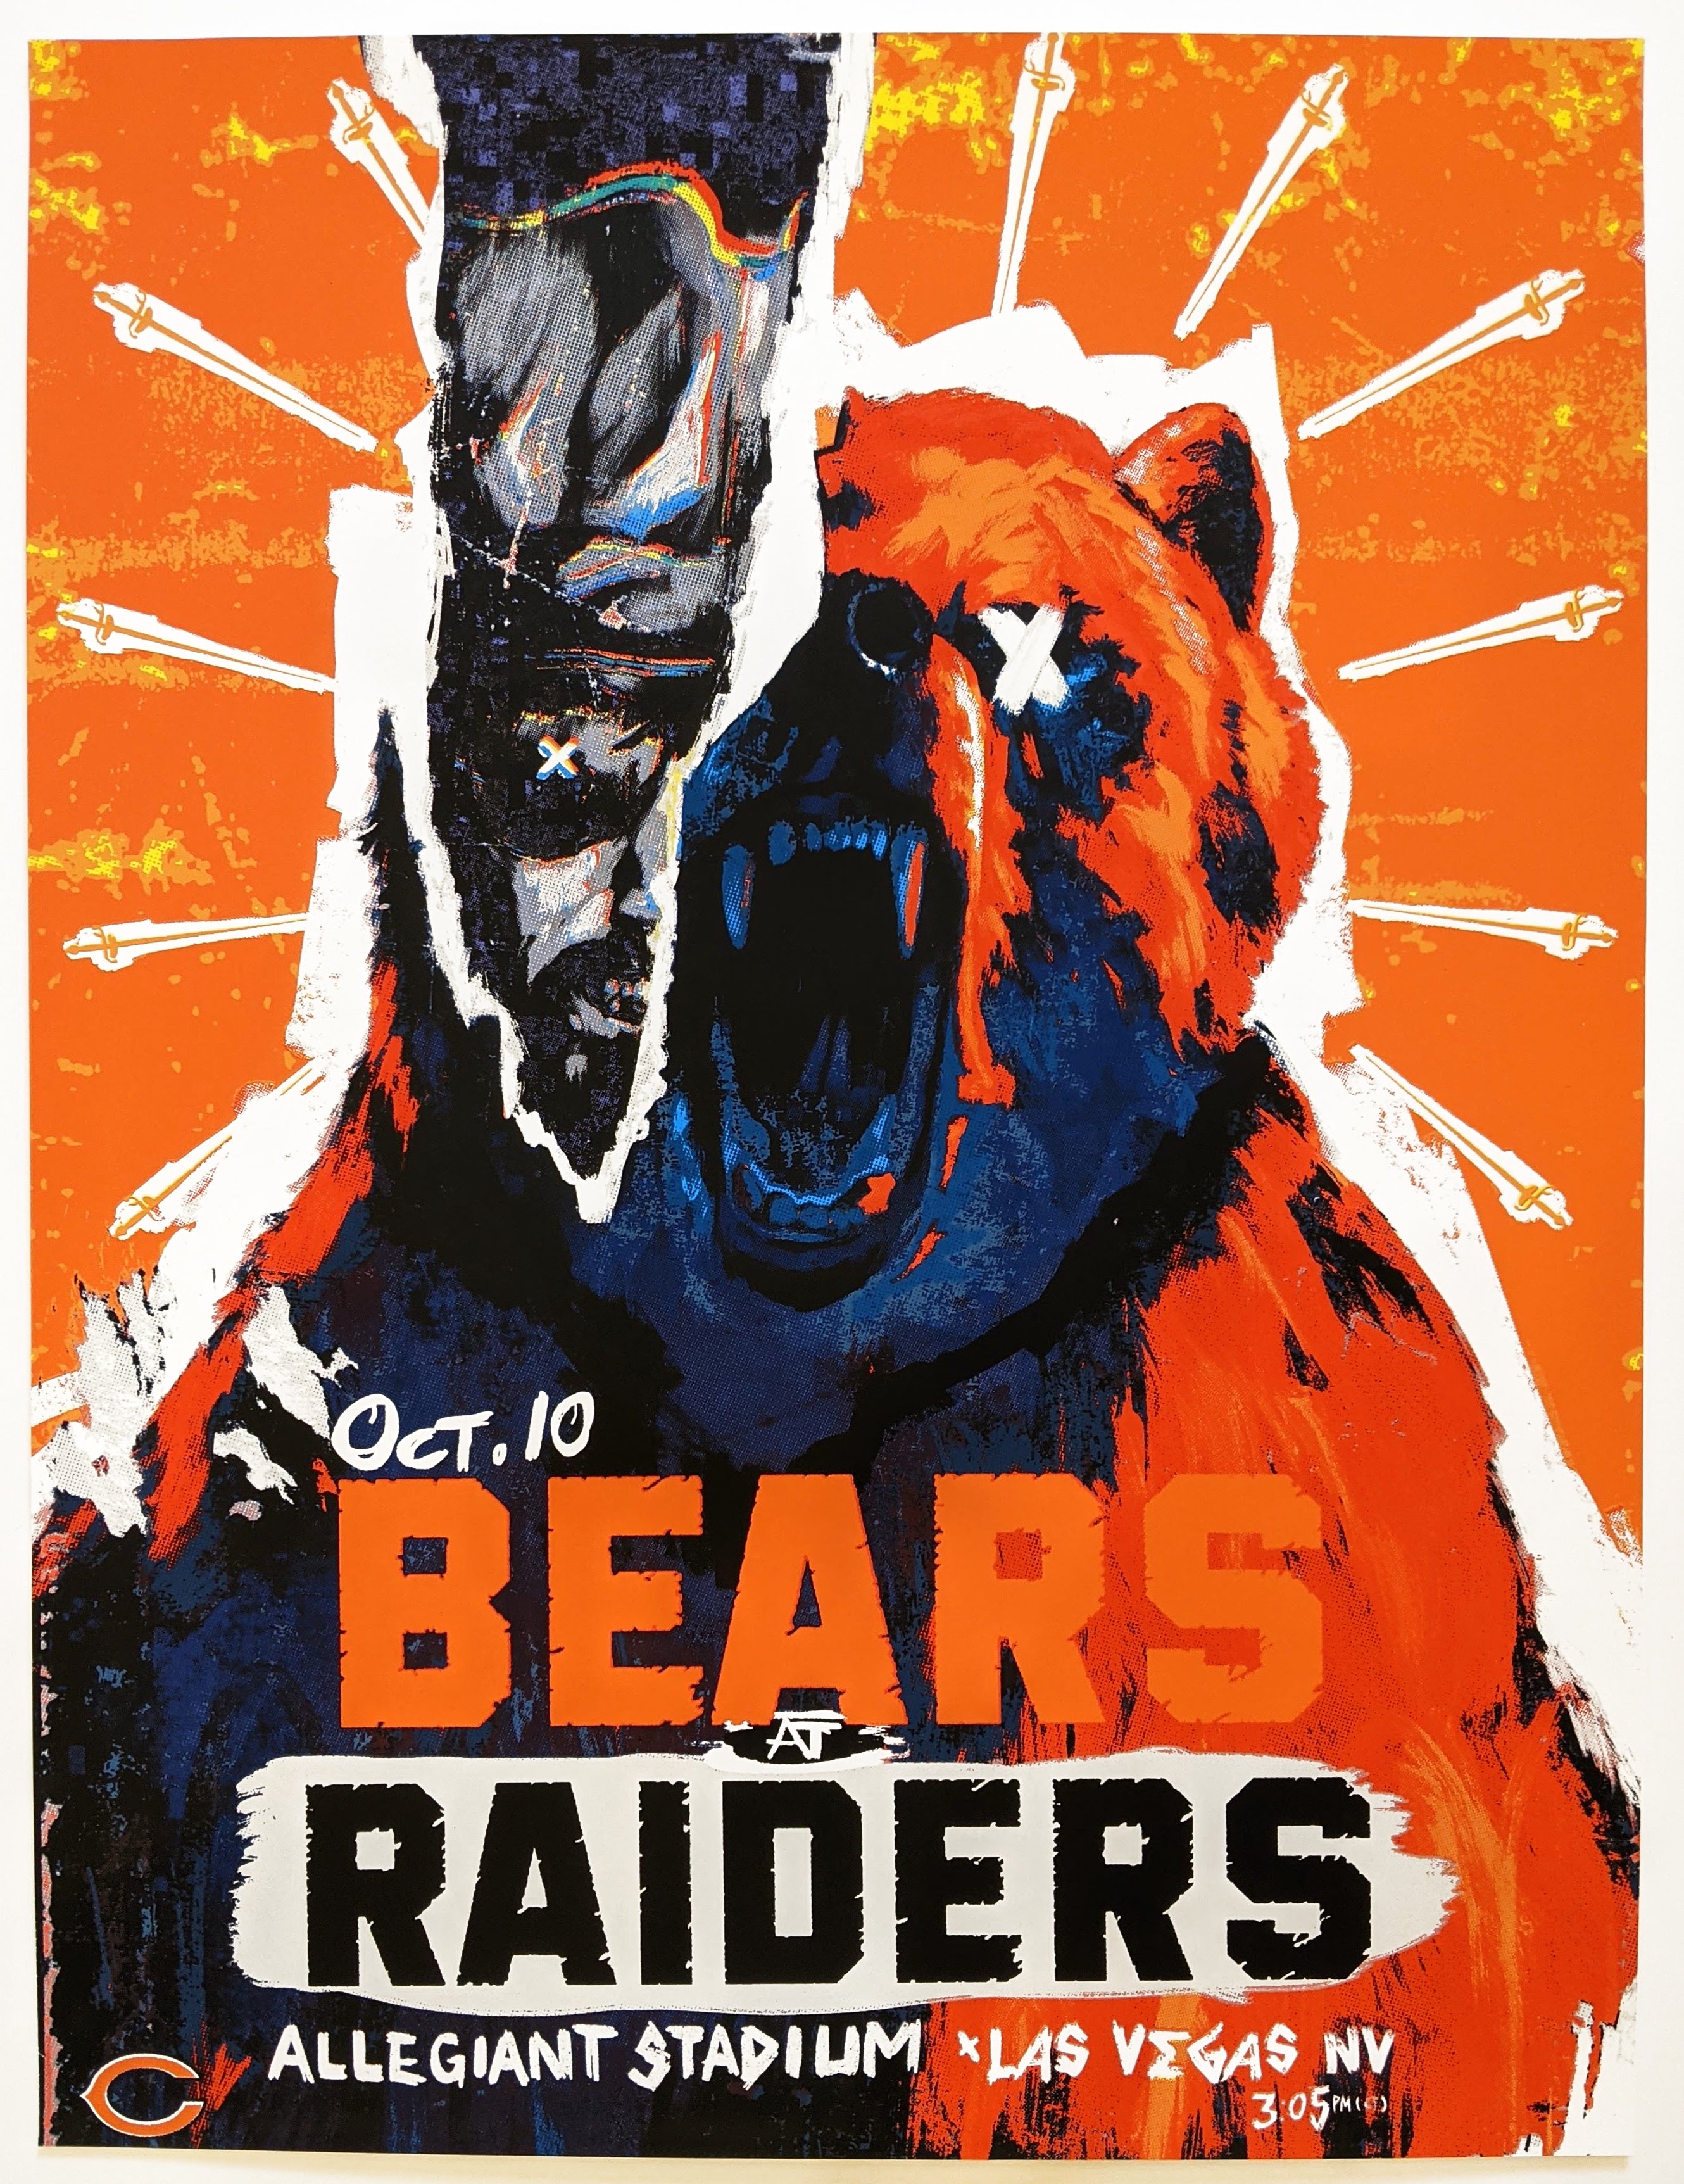 Game 5: "Official Bears Vs. Raiders" by Oscar Joyo